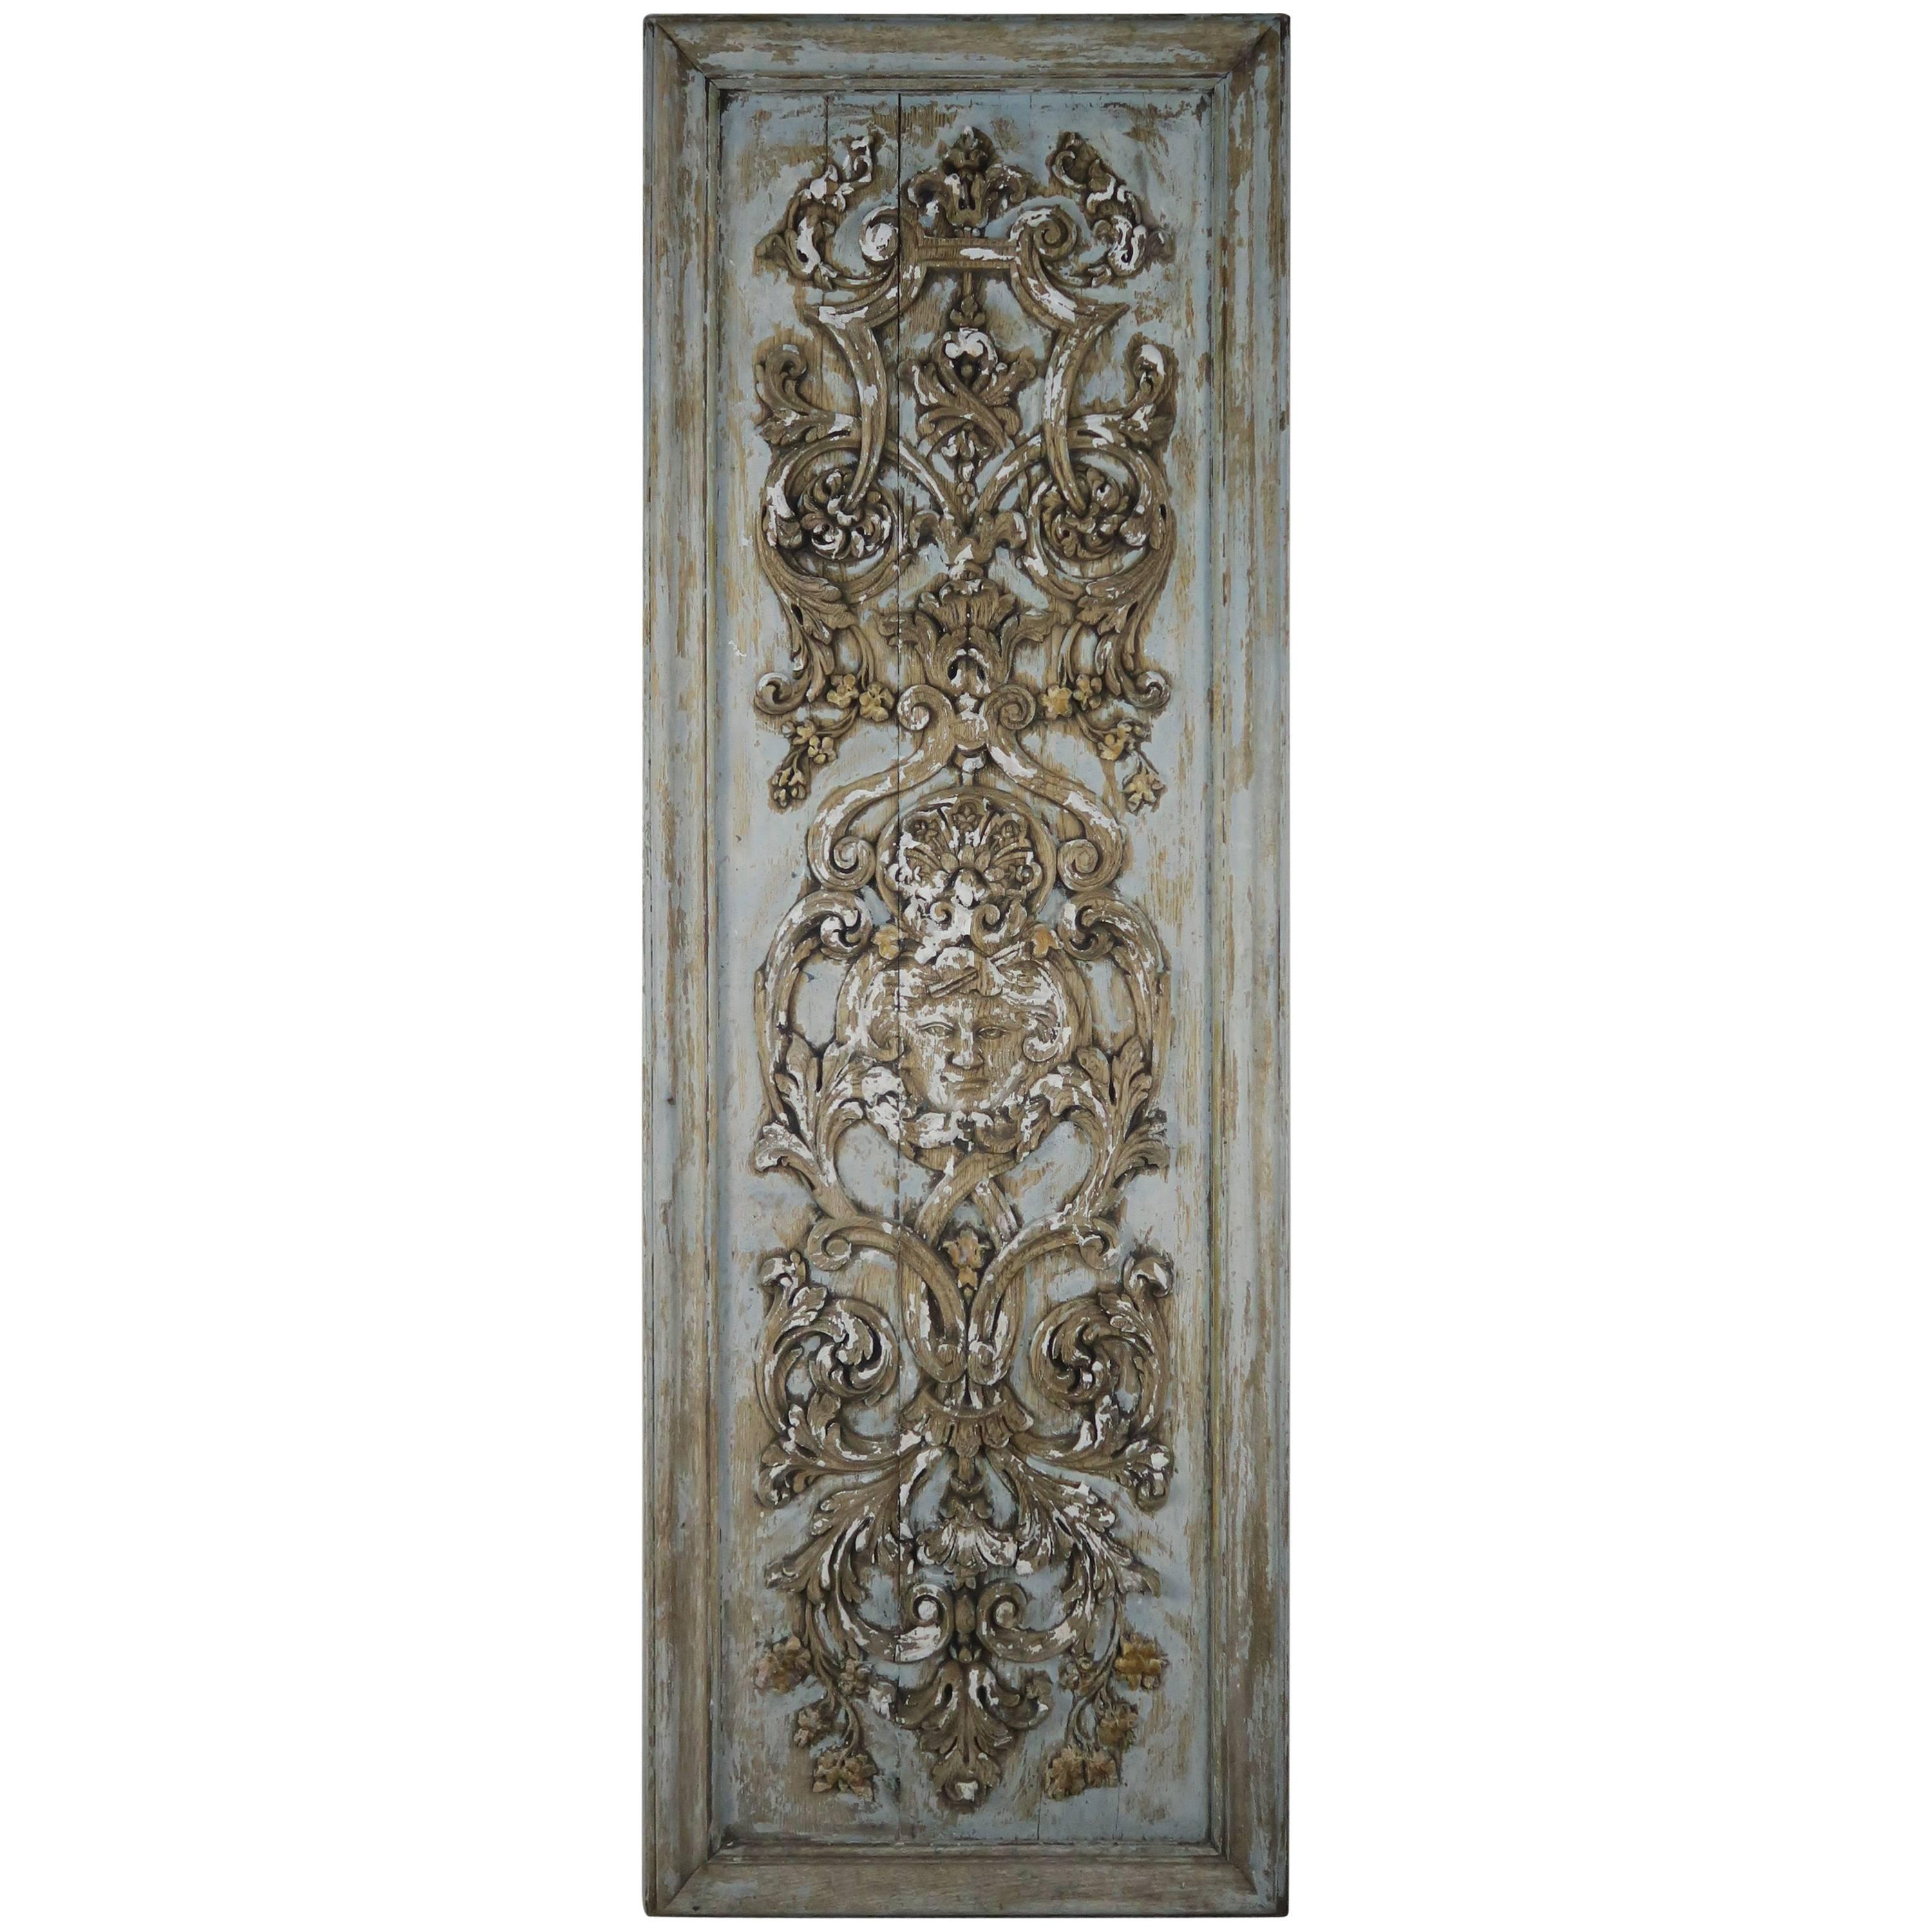 19th Century Italian Carved Wood Panel